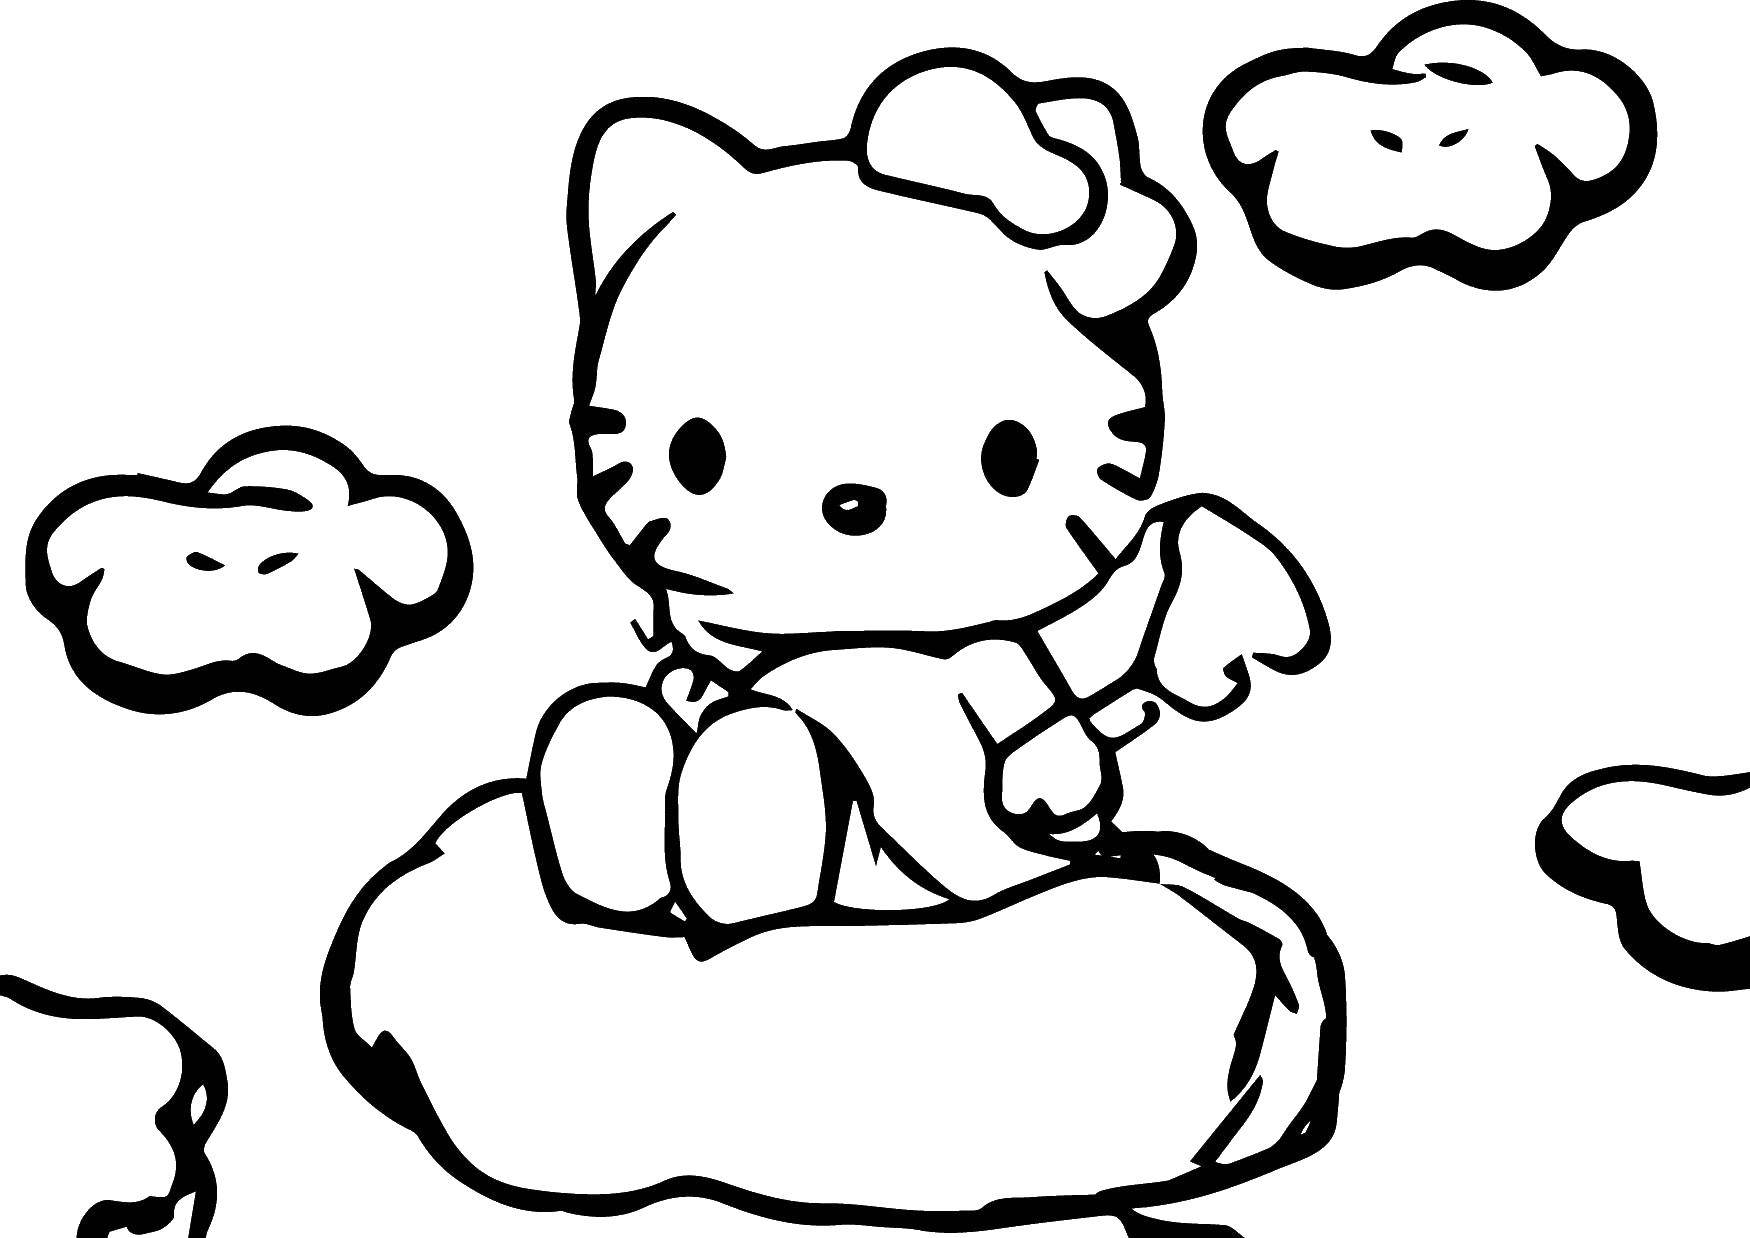 Coloring Hello kitty. Category Hello Kitty. Tags:  Hello kitty, cloud.